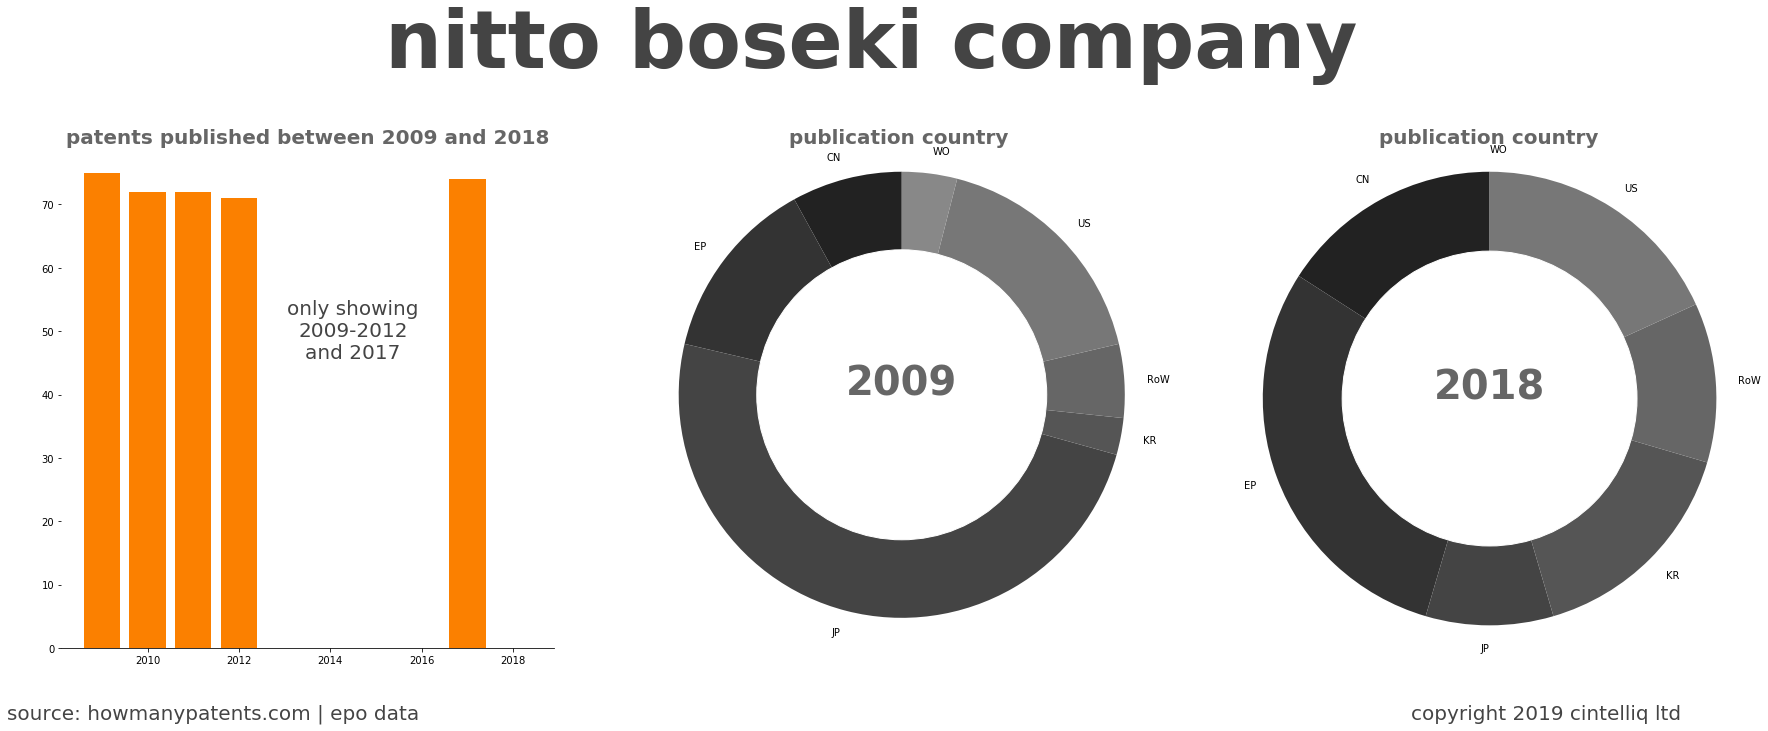 summary of patents for Nitto Boseki Company